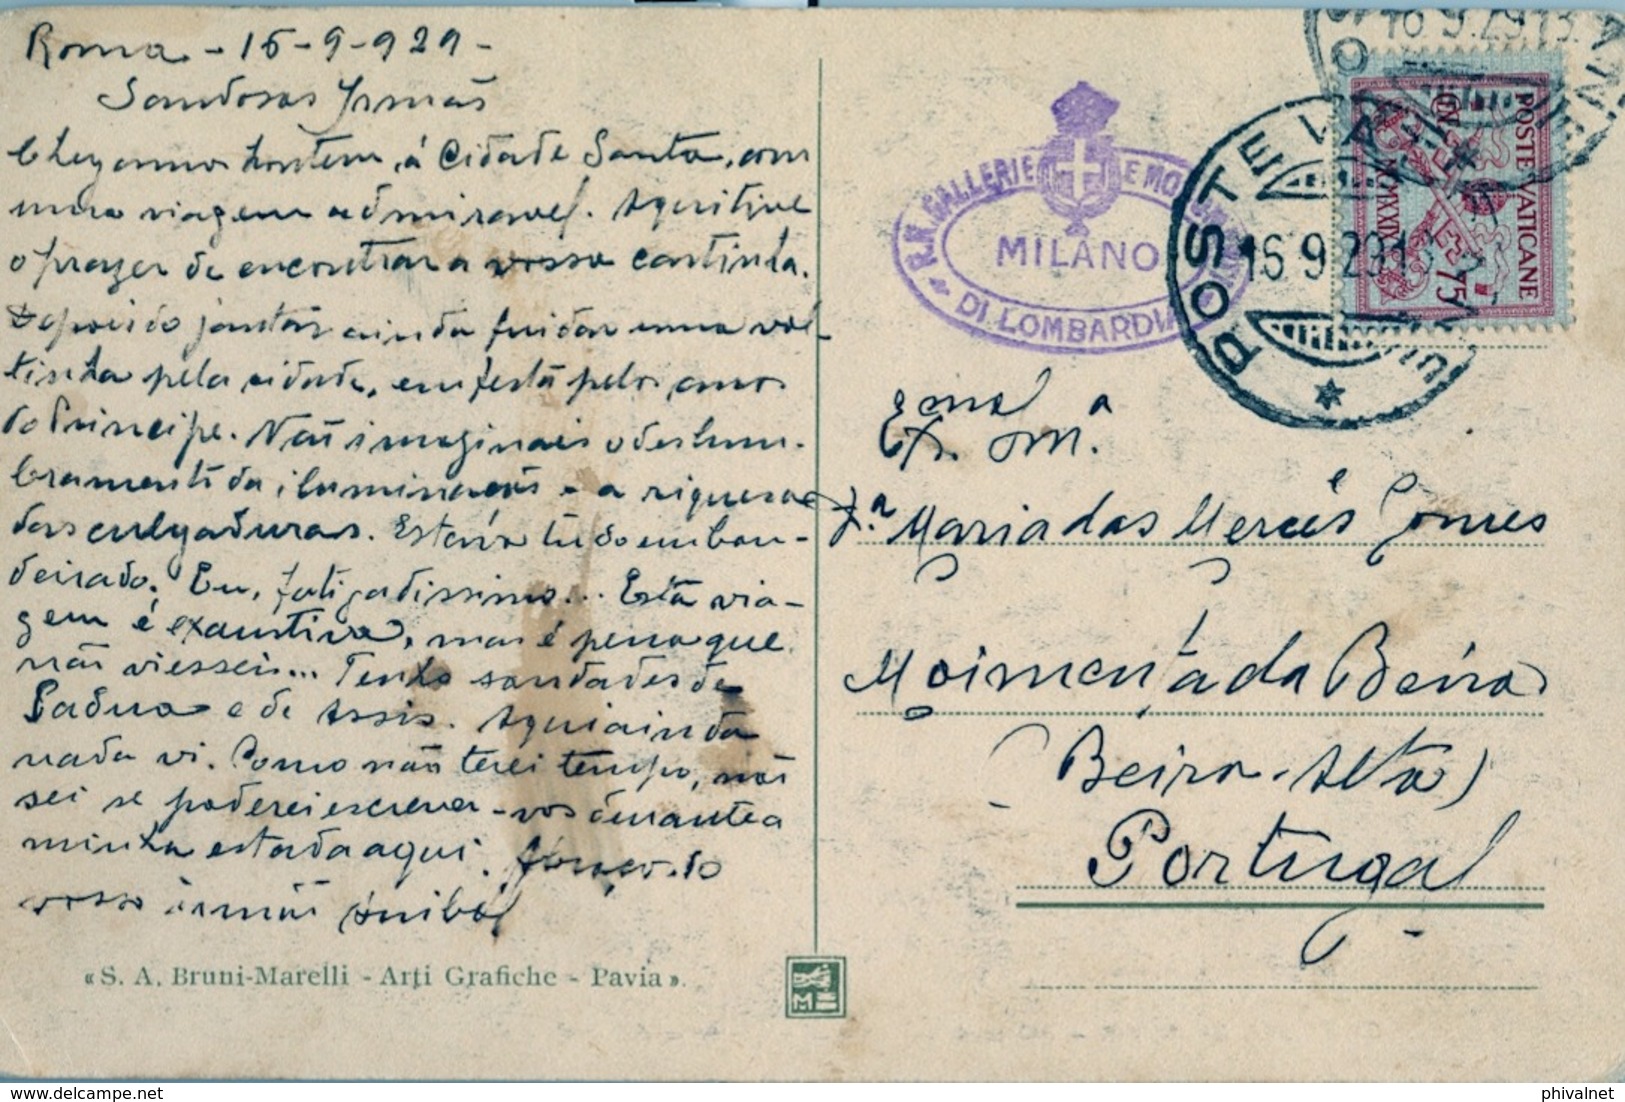 1929 , VATICANO , TARJETA POSTAL CIRCULADA A MOIMENTA DA BEIRA - Covers & Documents